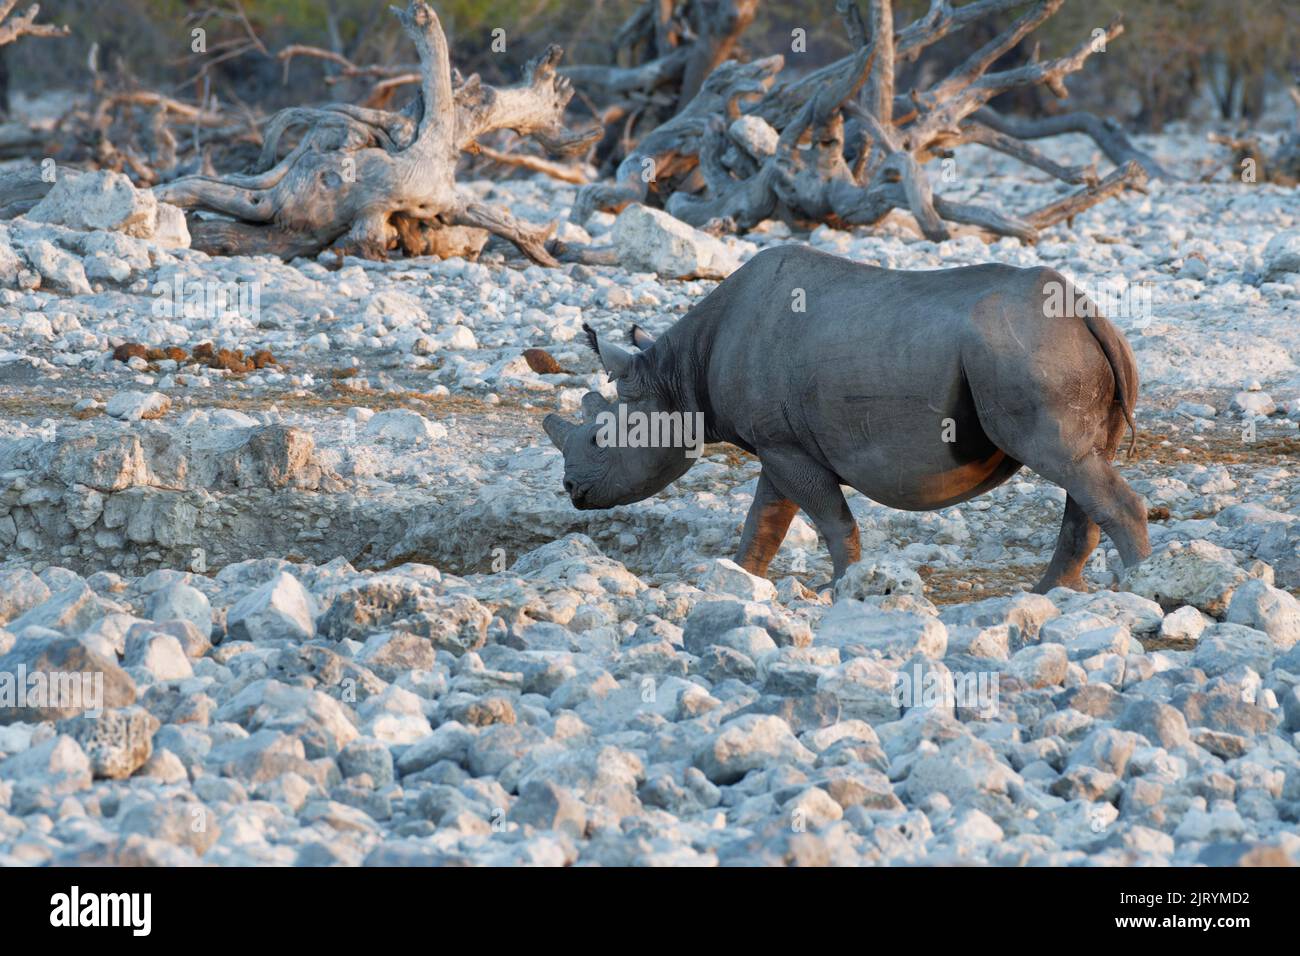 Black rhinoceros (Diceros bicornis) with sawed off horns, anti-poaching measure, adult walking towards the waterhole, evening light, Etosha National P Stock Photo